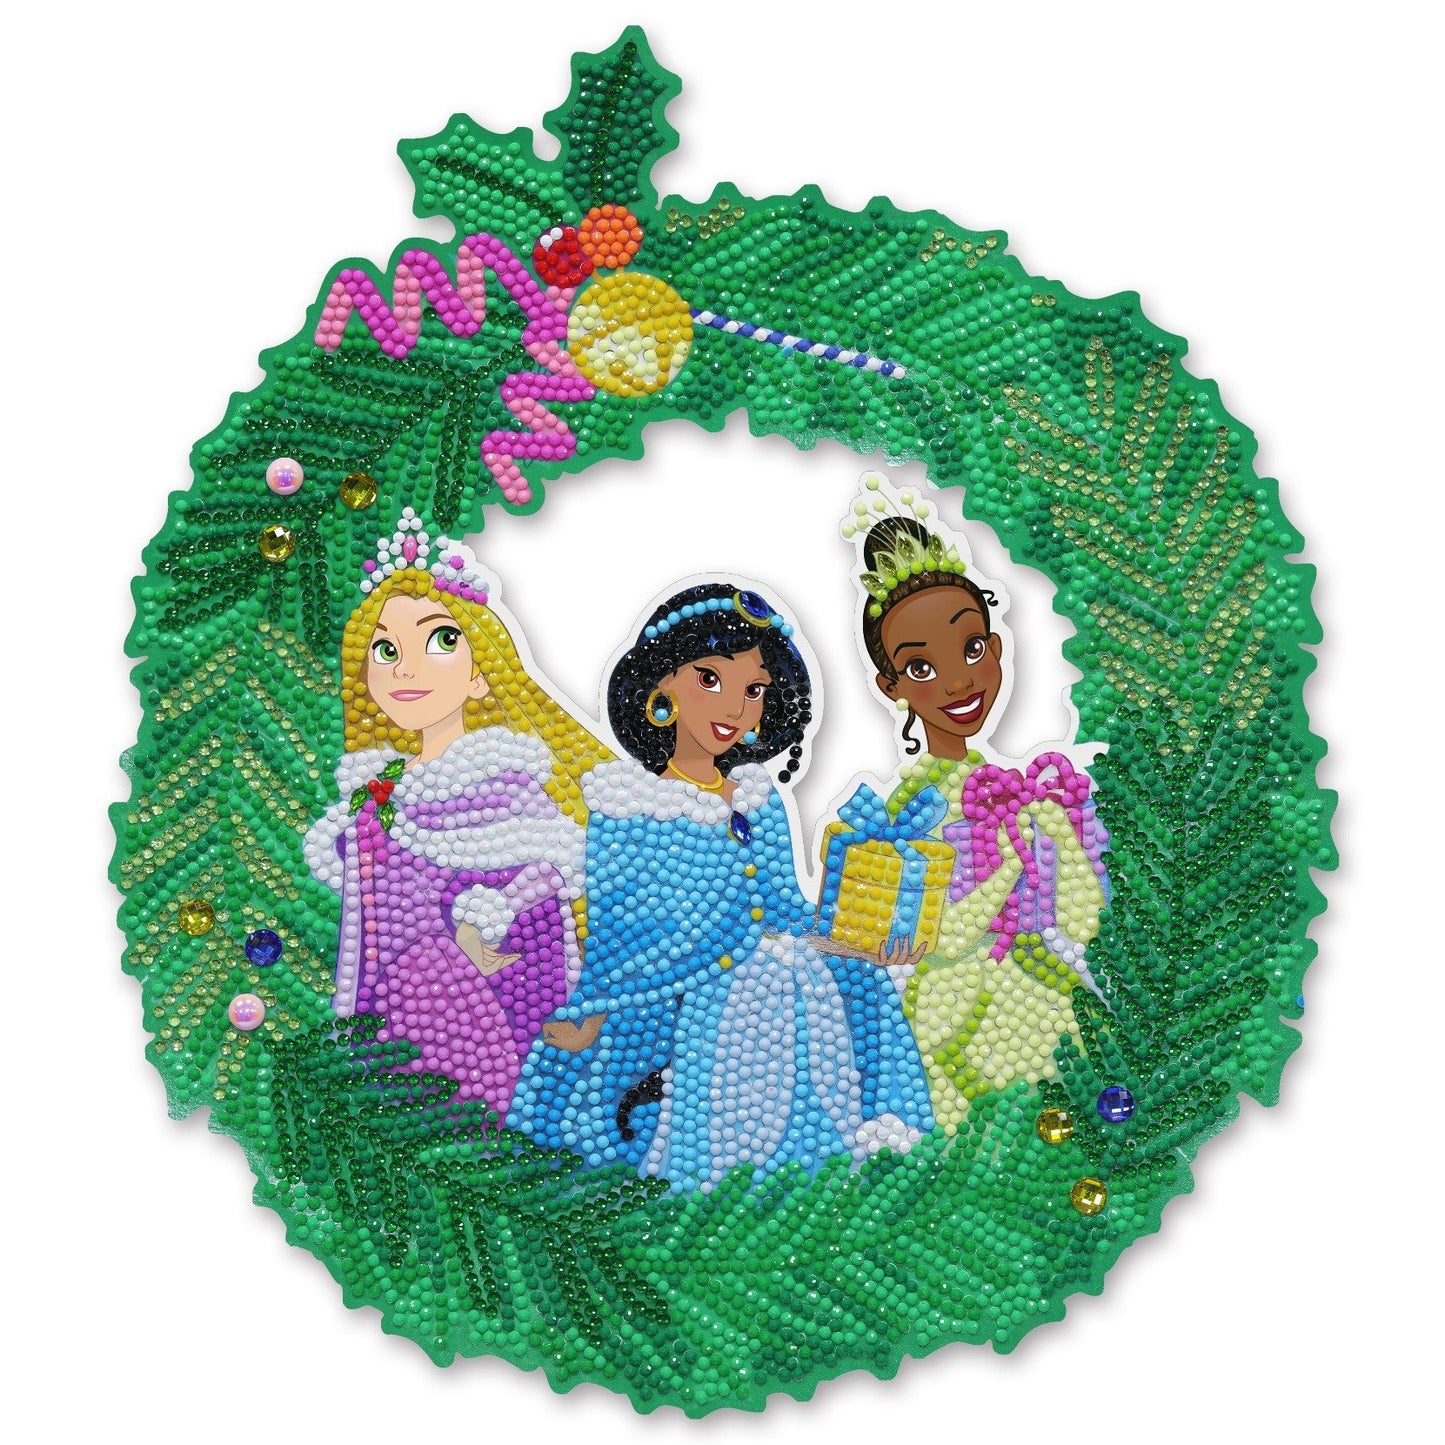 CA-WRDNY50: Wreath - Disney Princesses